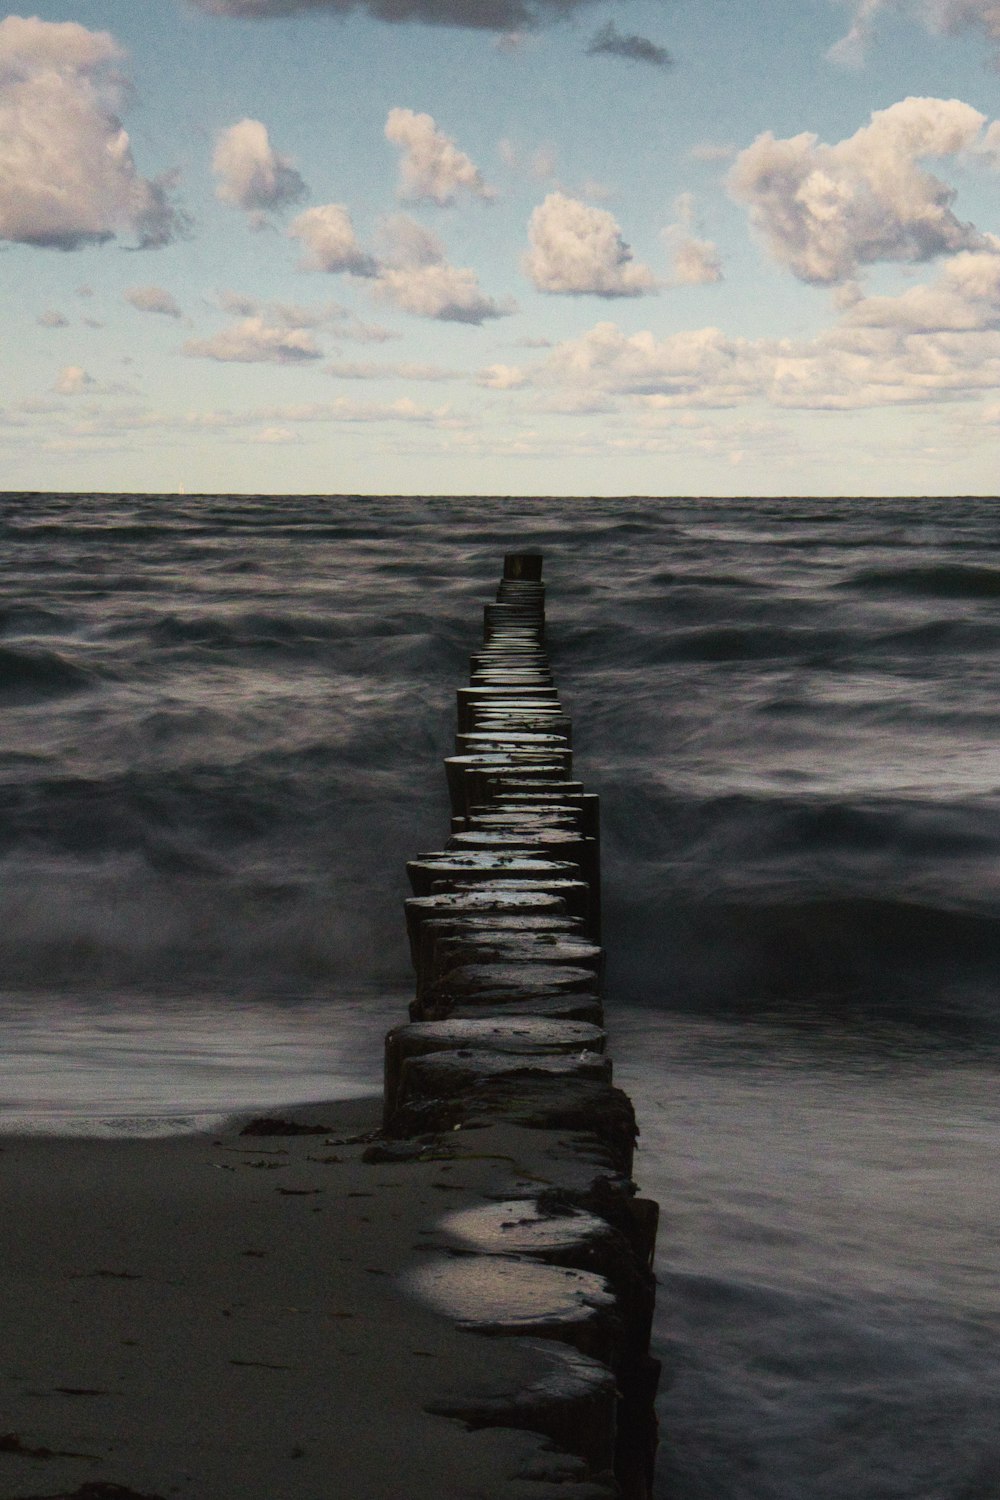 a long pier extending into the ocean under a cloudy sky